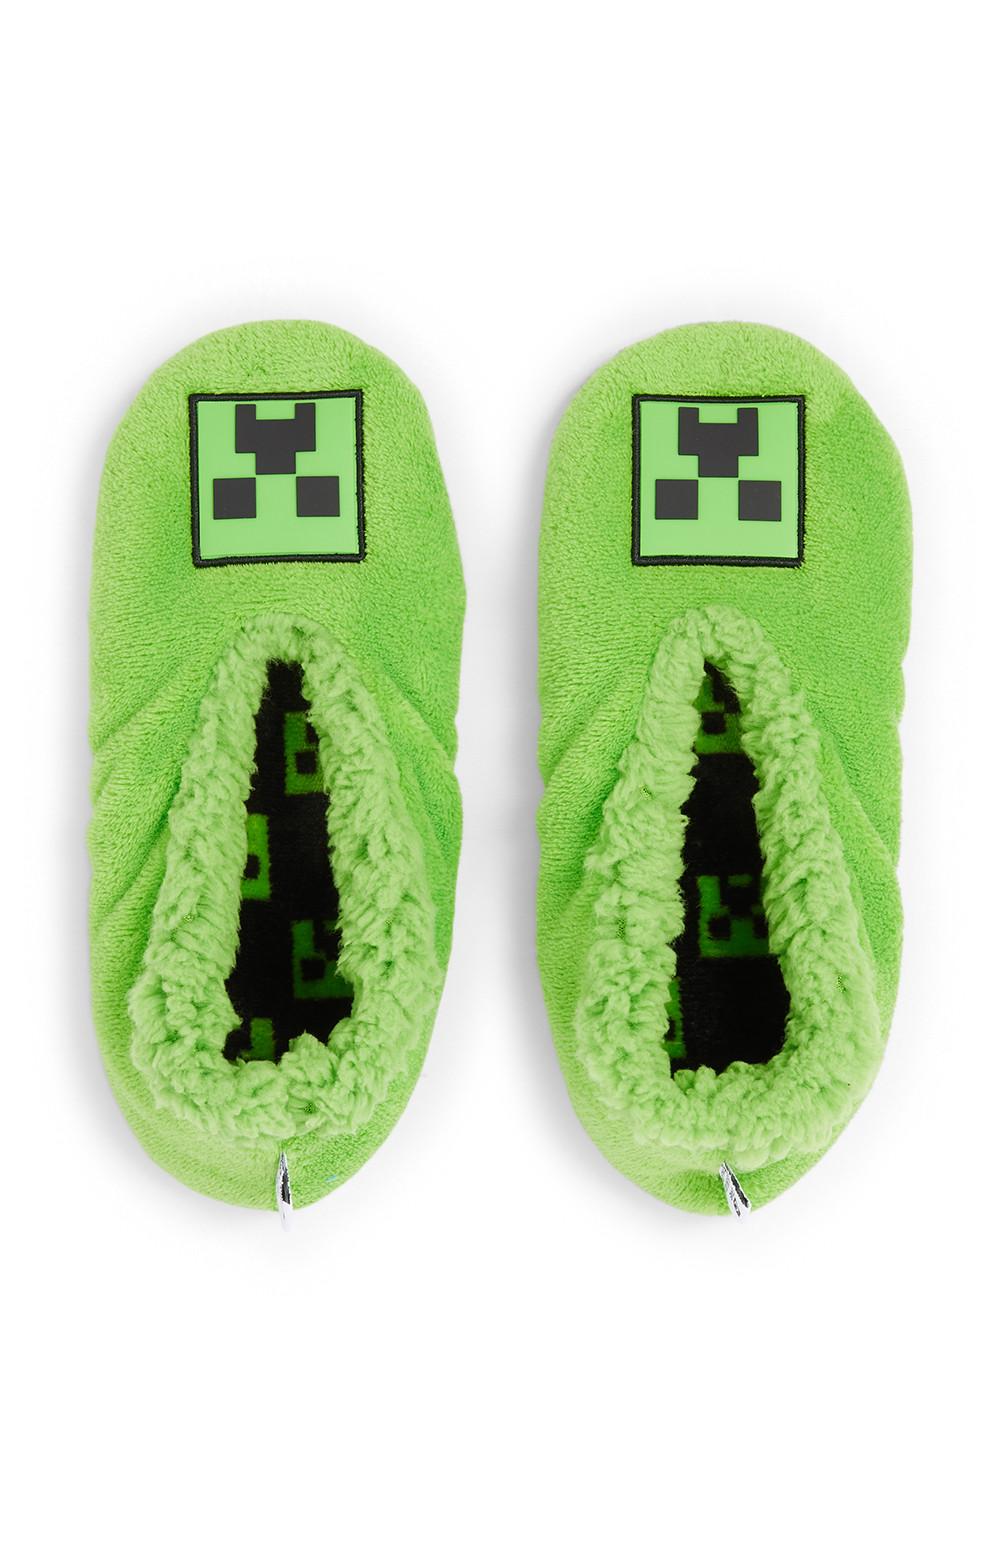 minecraft slippers boys